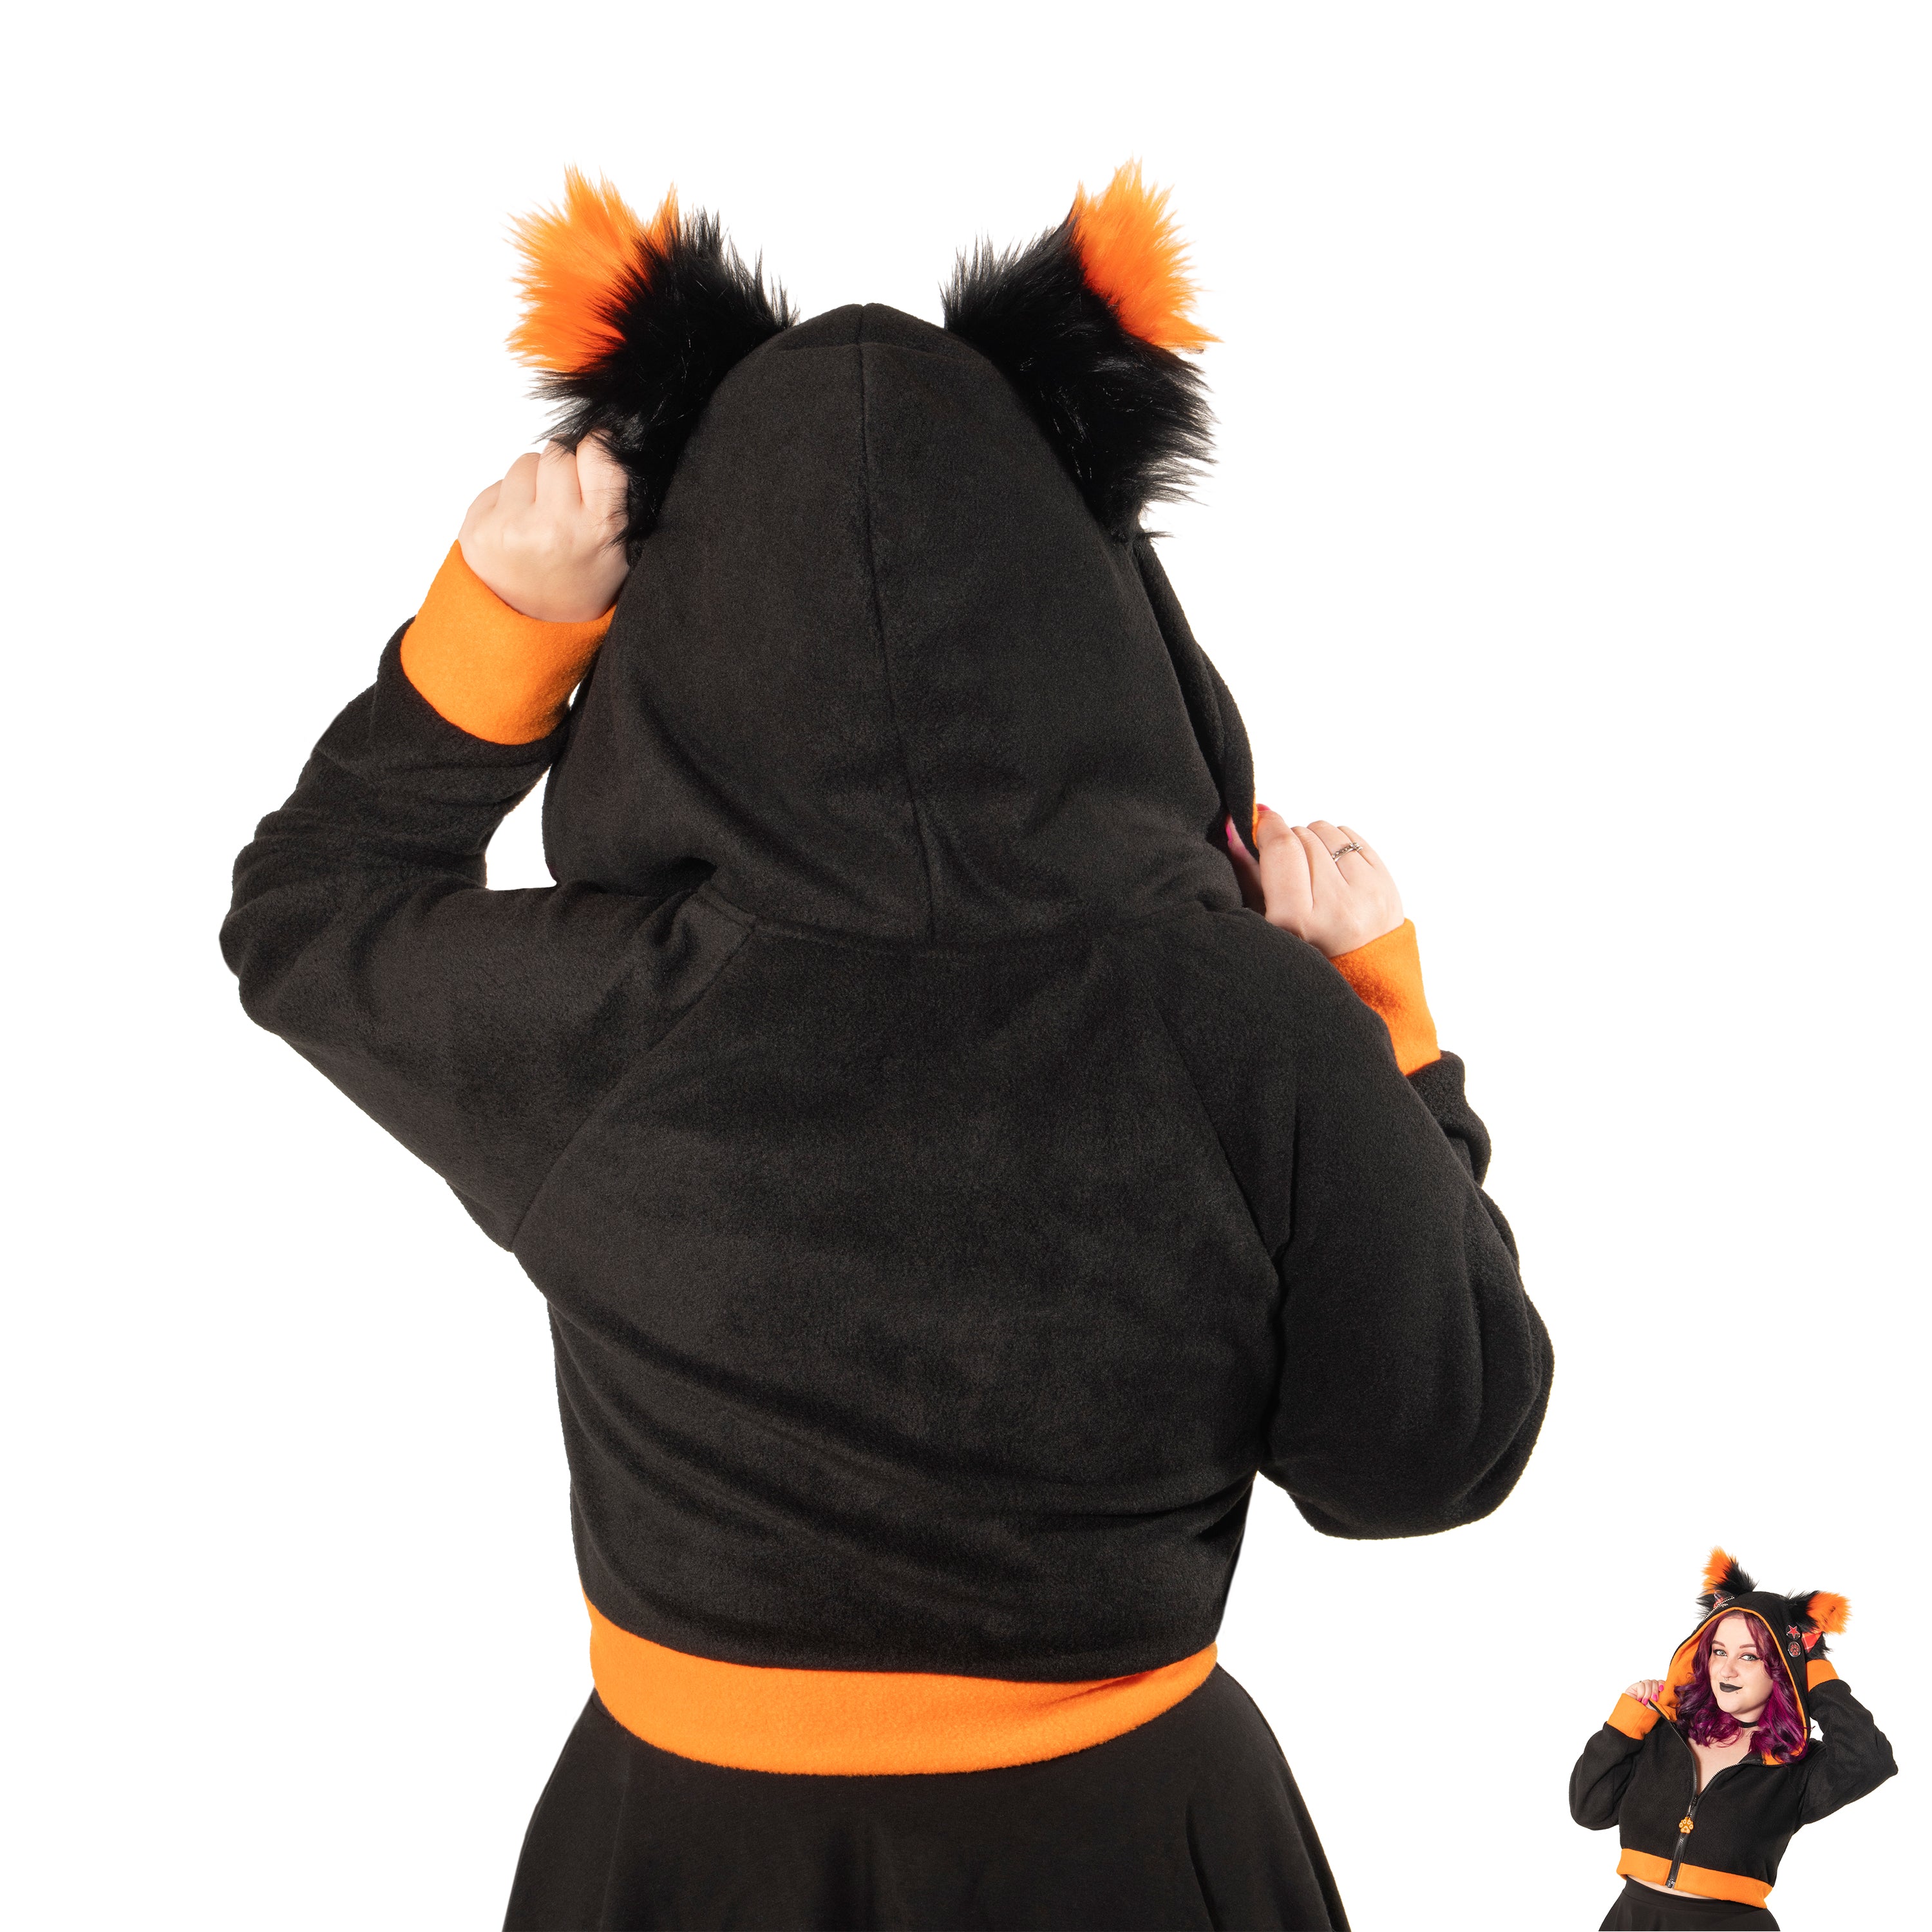 Pin Punx Fox Yip Crop Hoodie - Pawstar Pawstar Crop Hoodie cosplay, costume, fox, furry, hoodie, ship-15, ship-30day